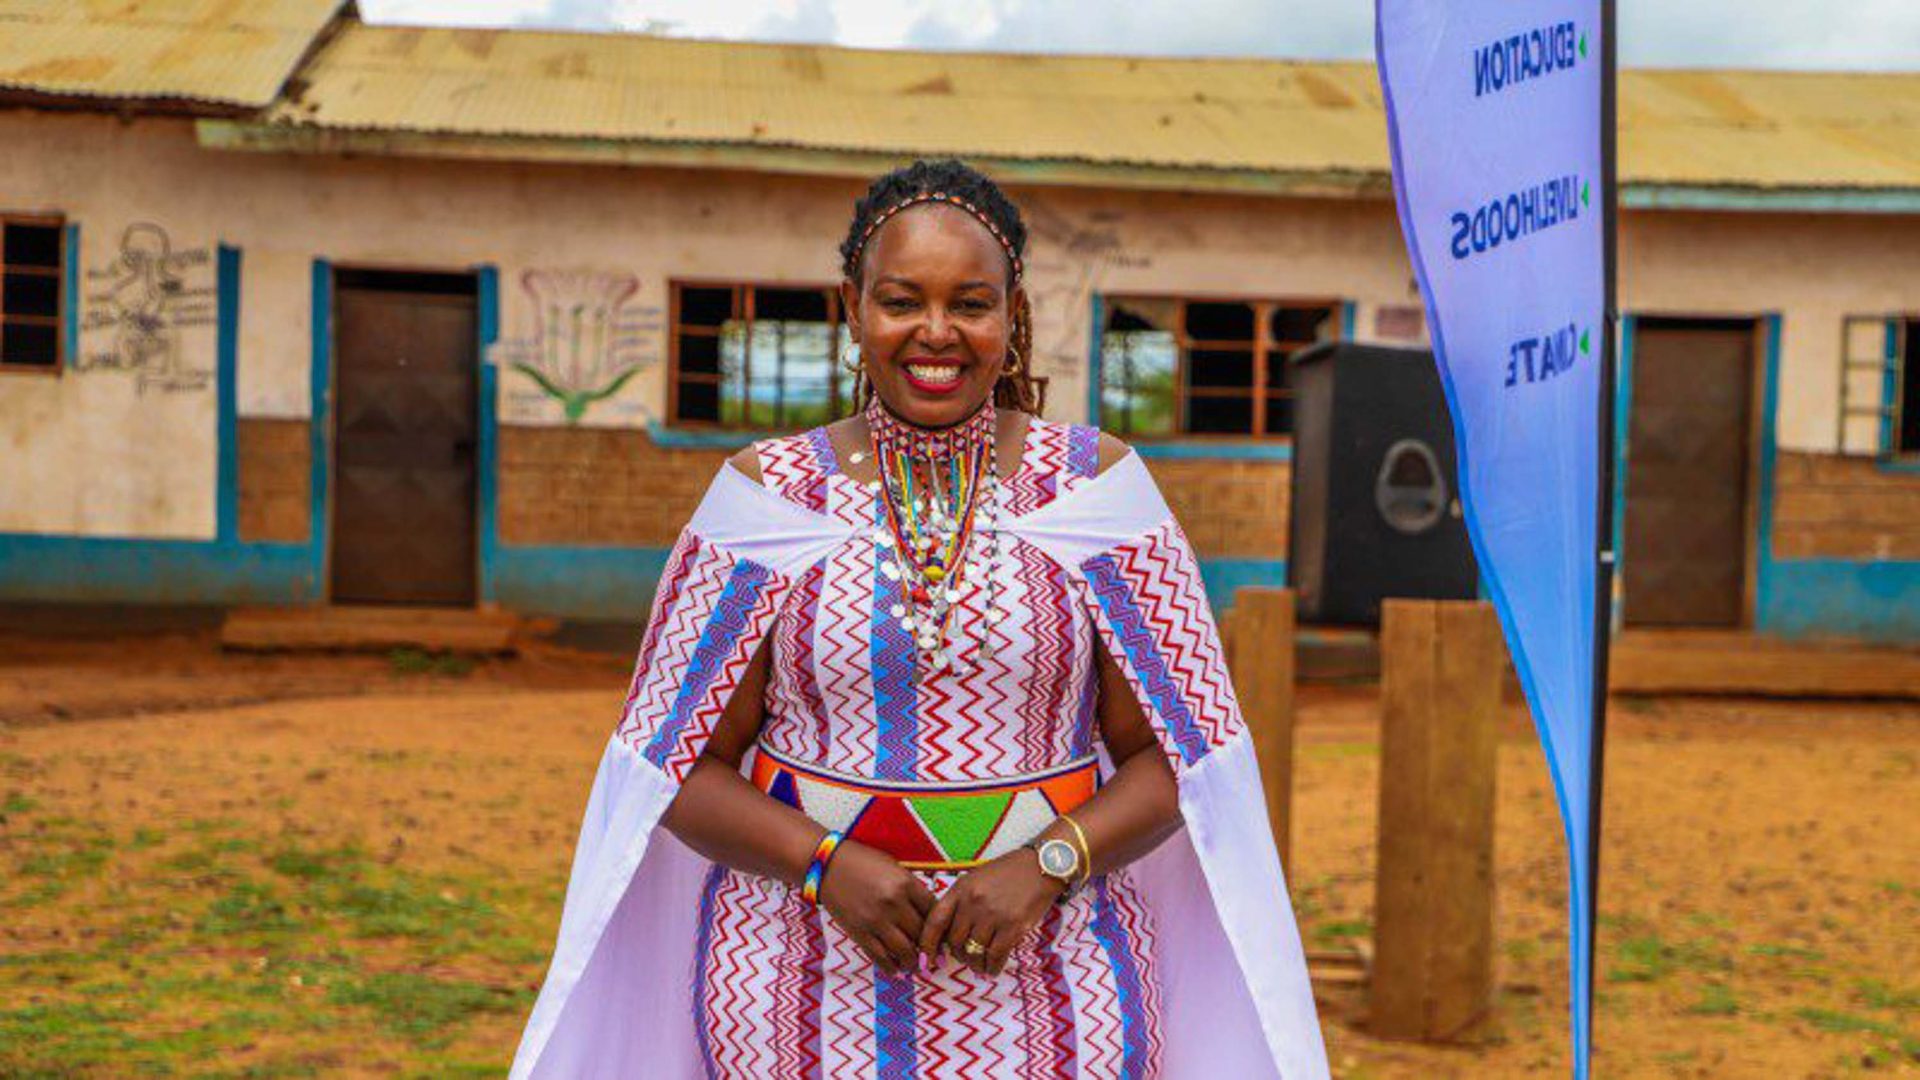 Meet Semerian Sankori, the woman changing the lives of rural communities in Kenya